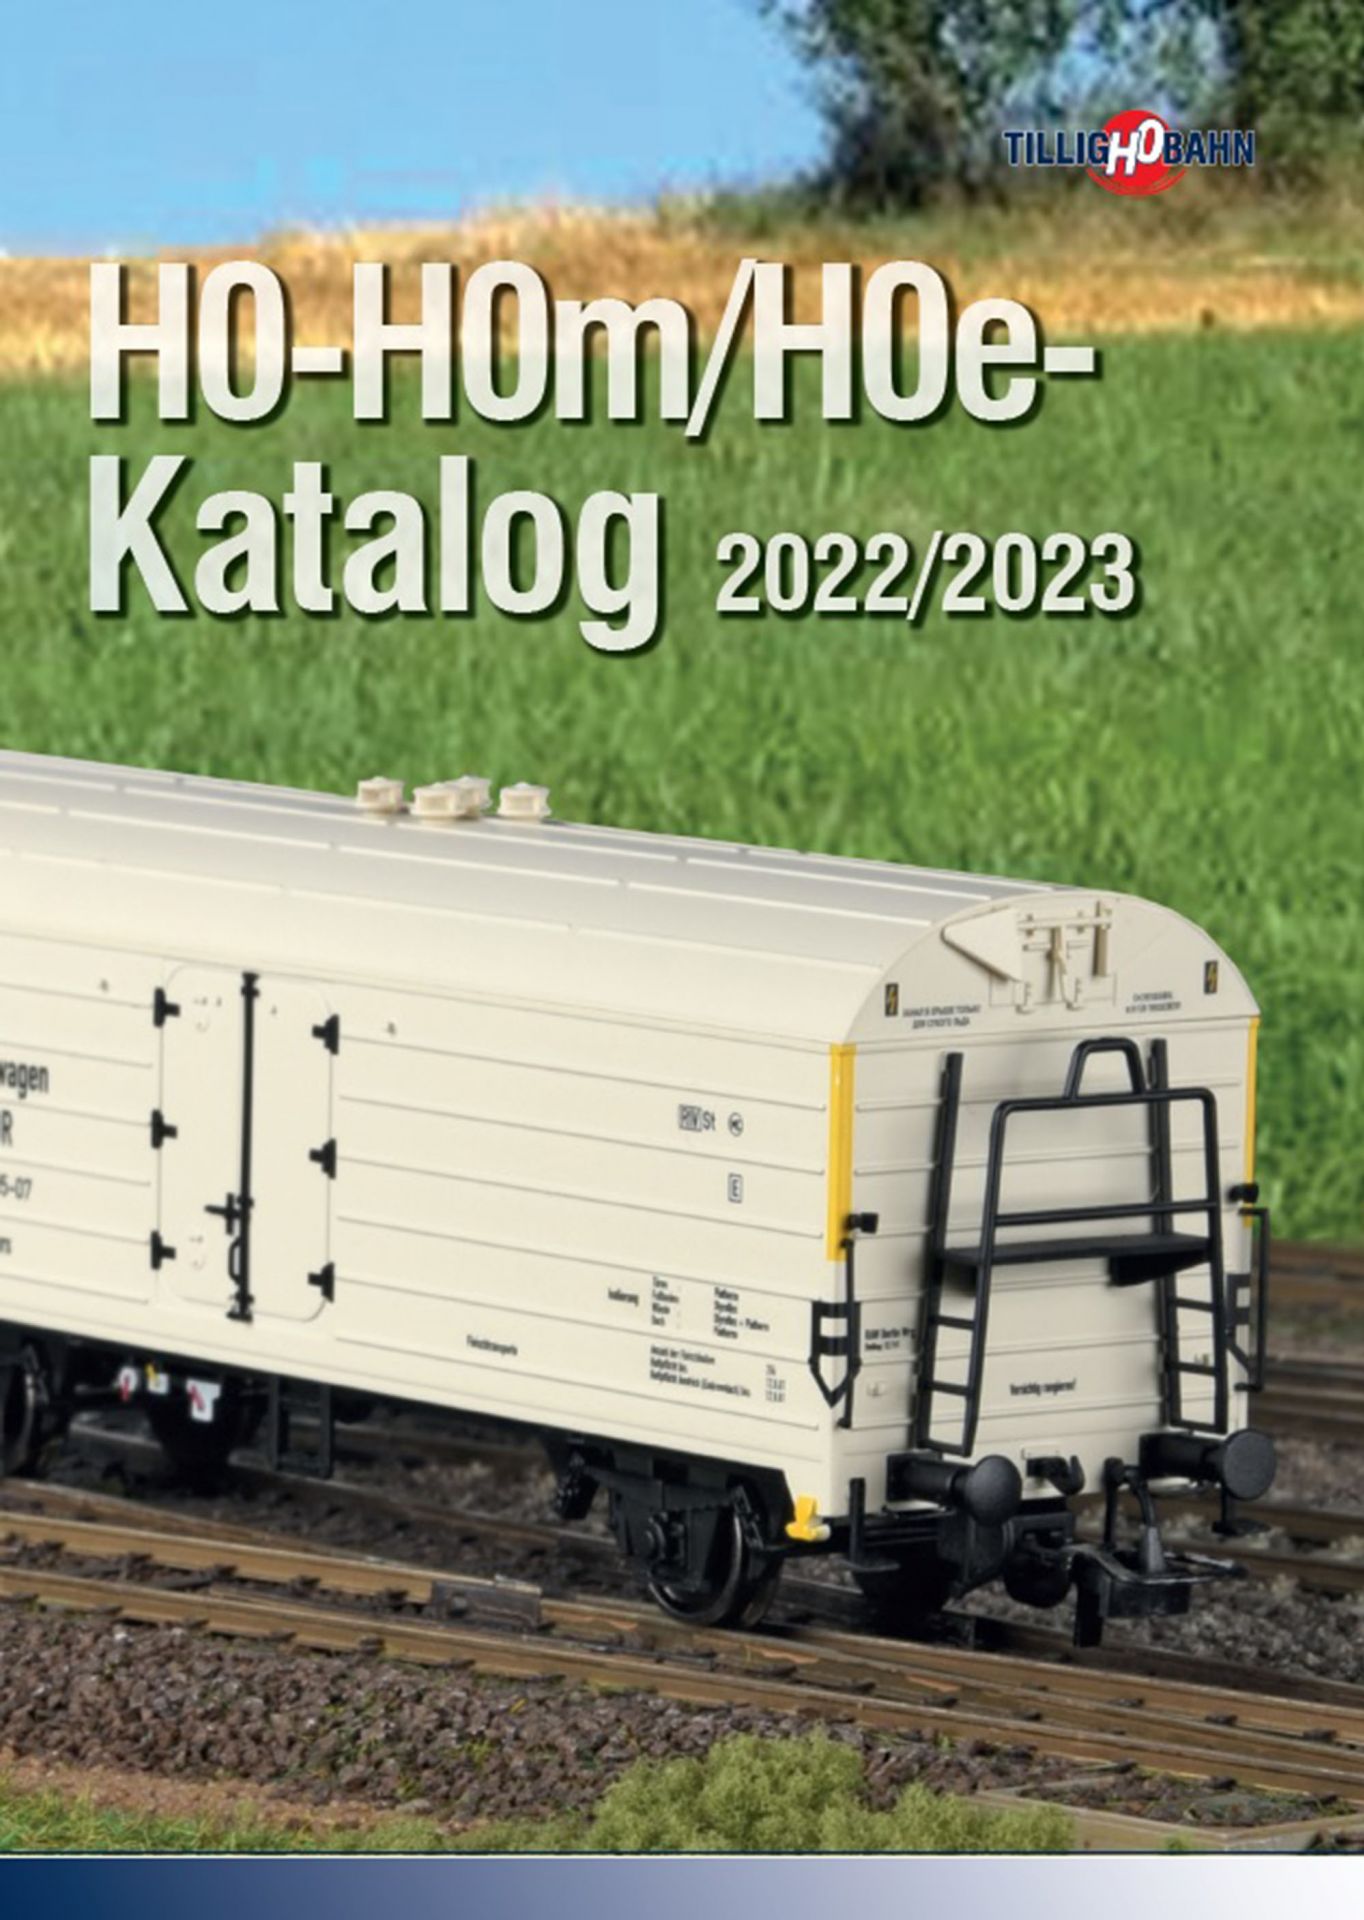 Tillig Katalog 2022/23 - HO-HOm/HOe